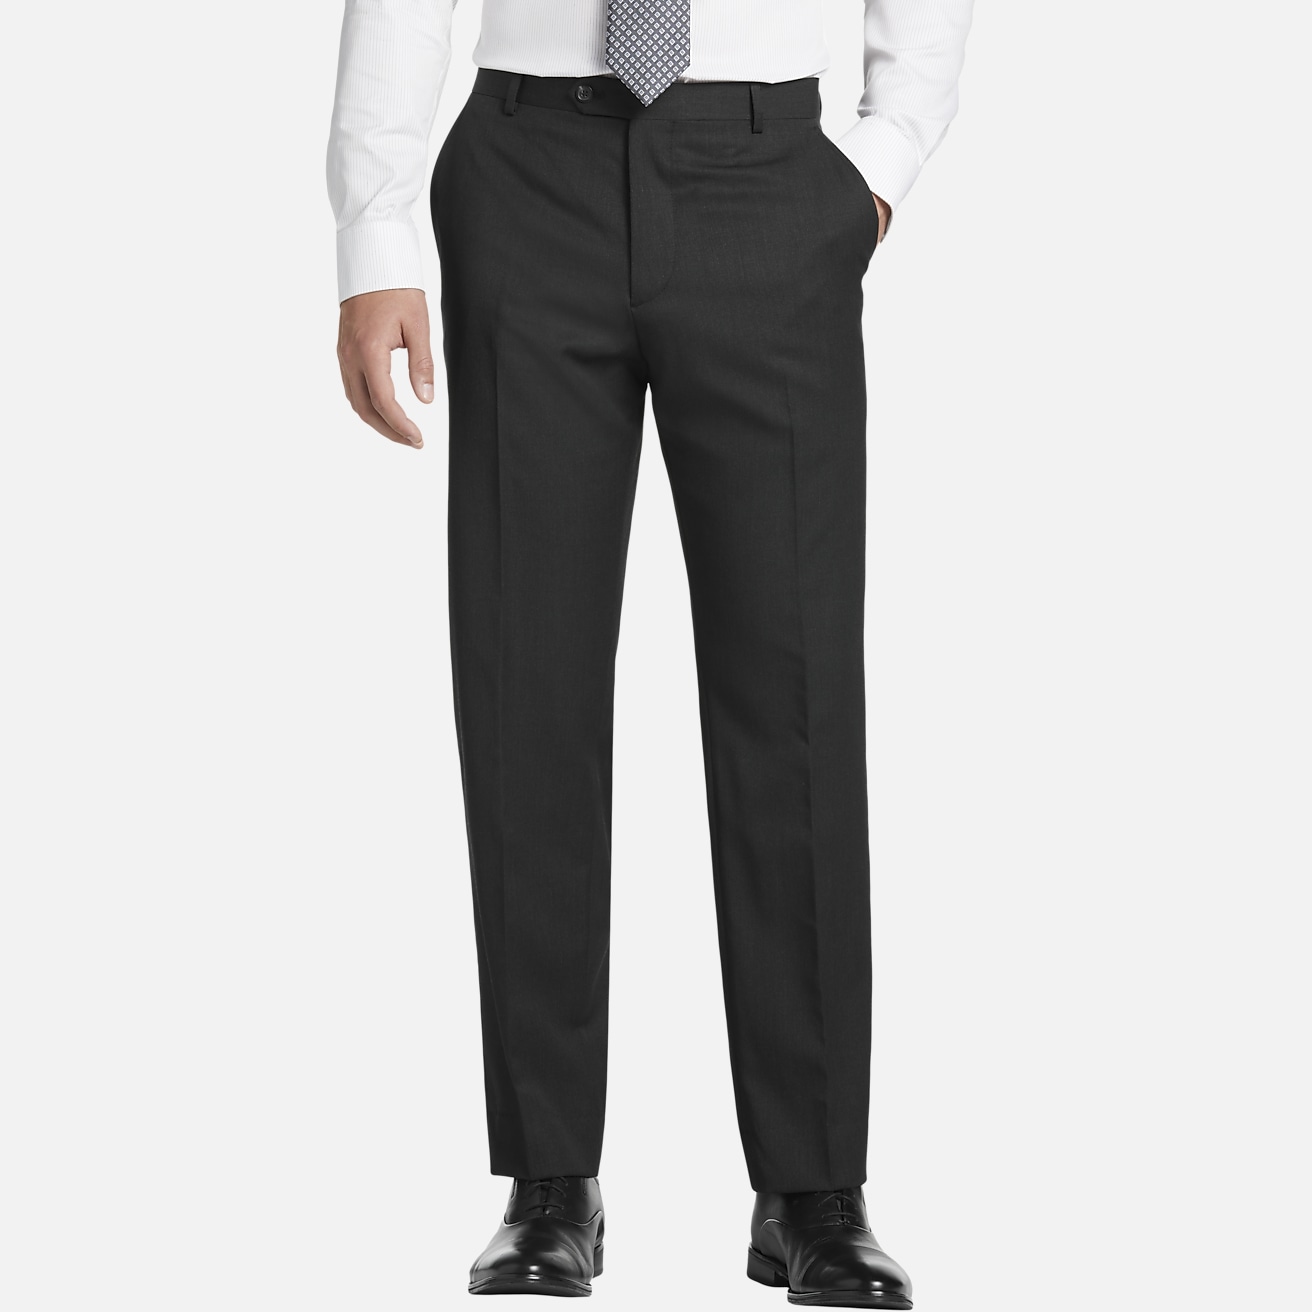 Pronto Uomo Platinum Modern Fit Suit Separates Pants, Clearance Suits